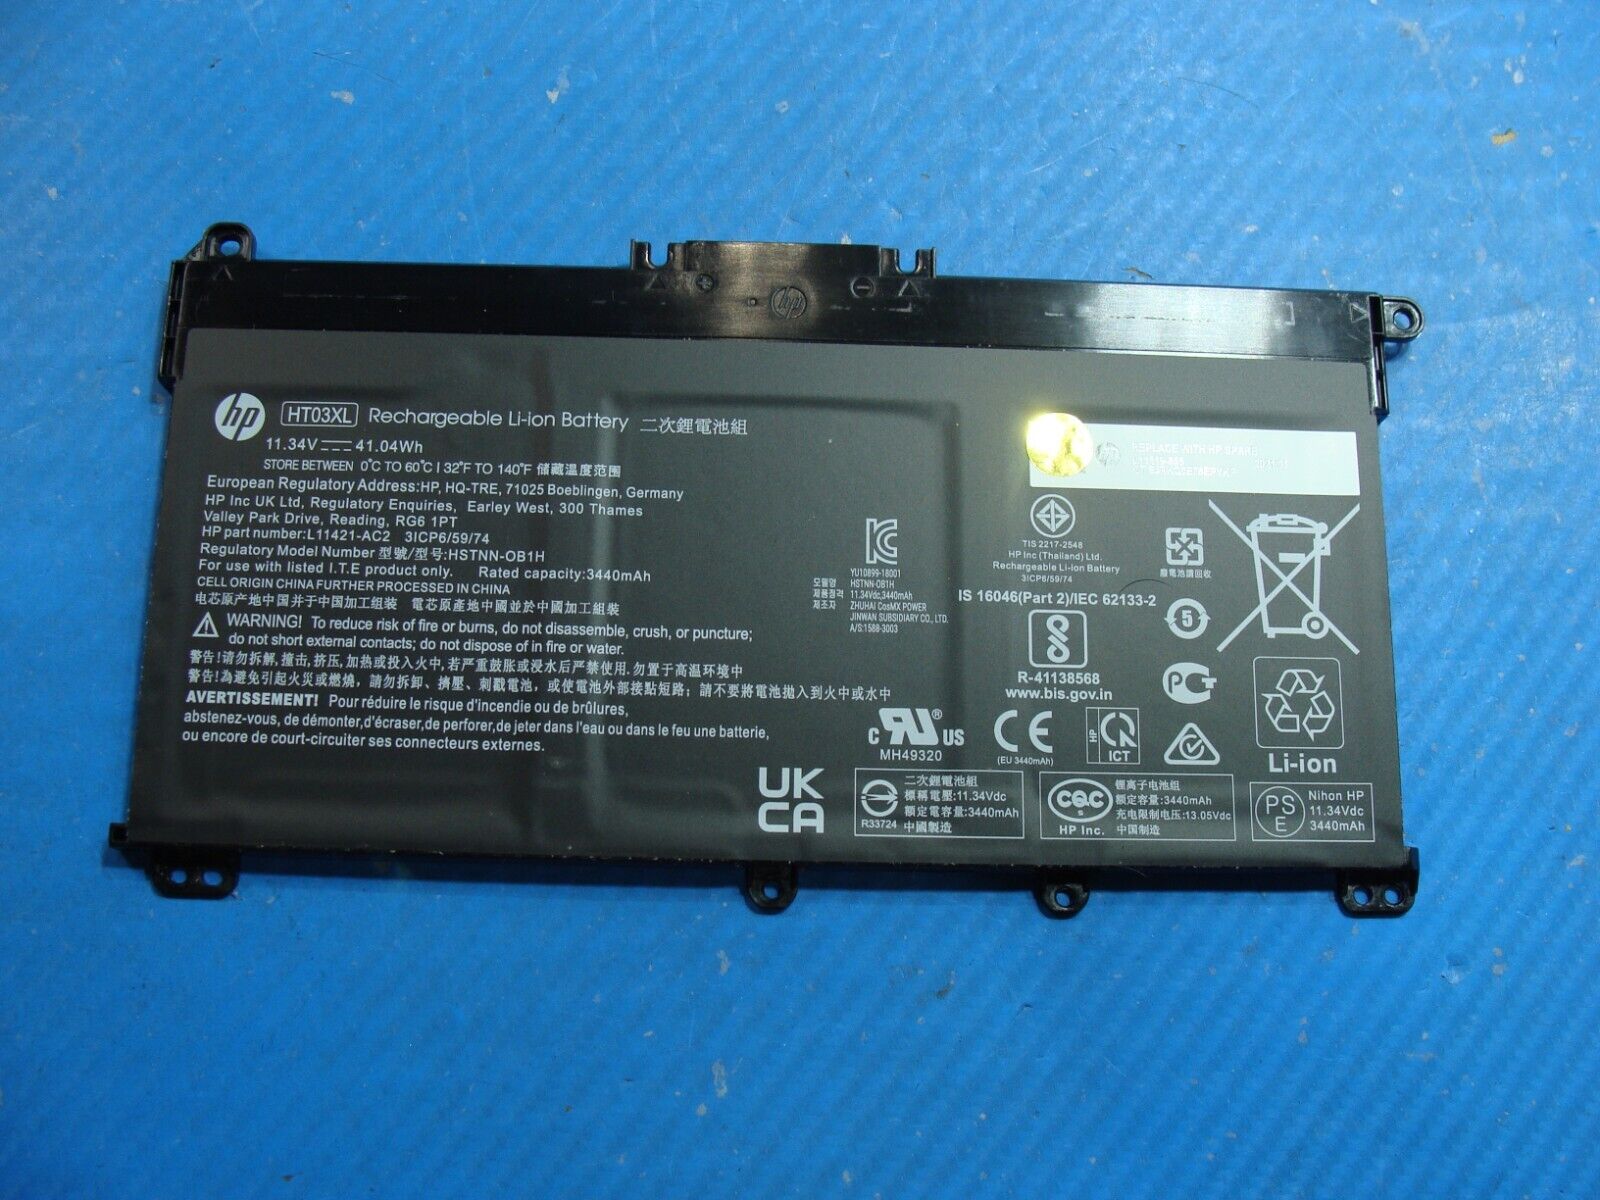 HP 15.6” 15-dw3025cl OEM Laptop Battery 11.34V 41.04Wh 3440mAh HT03XL L11119-855